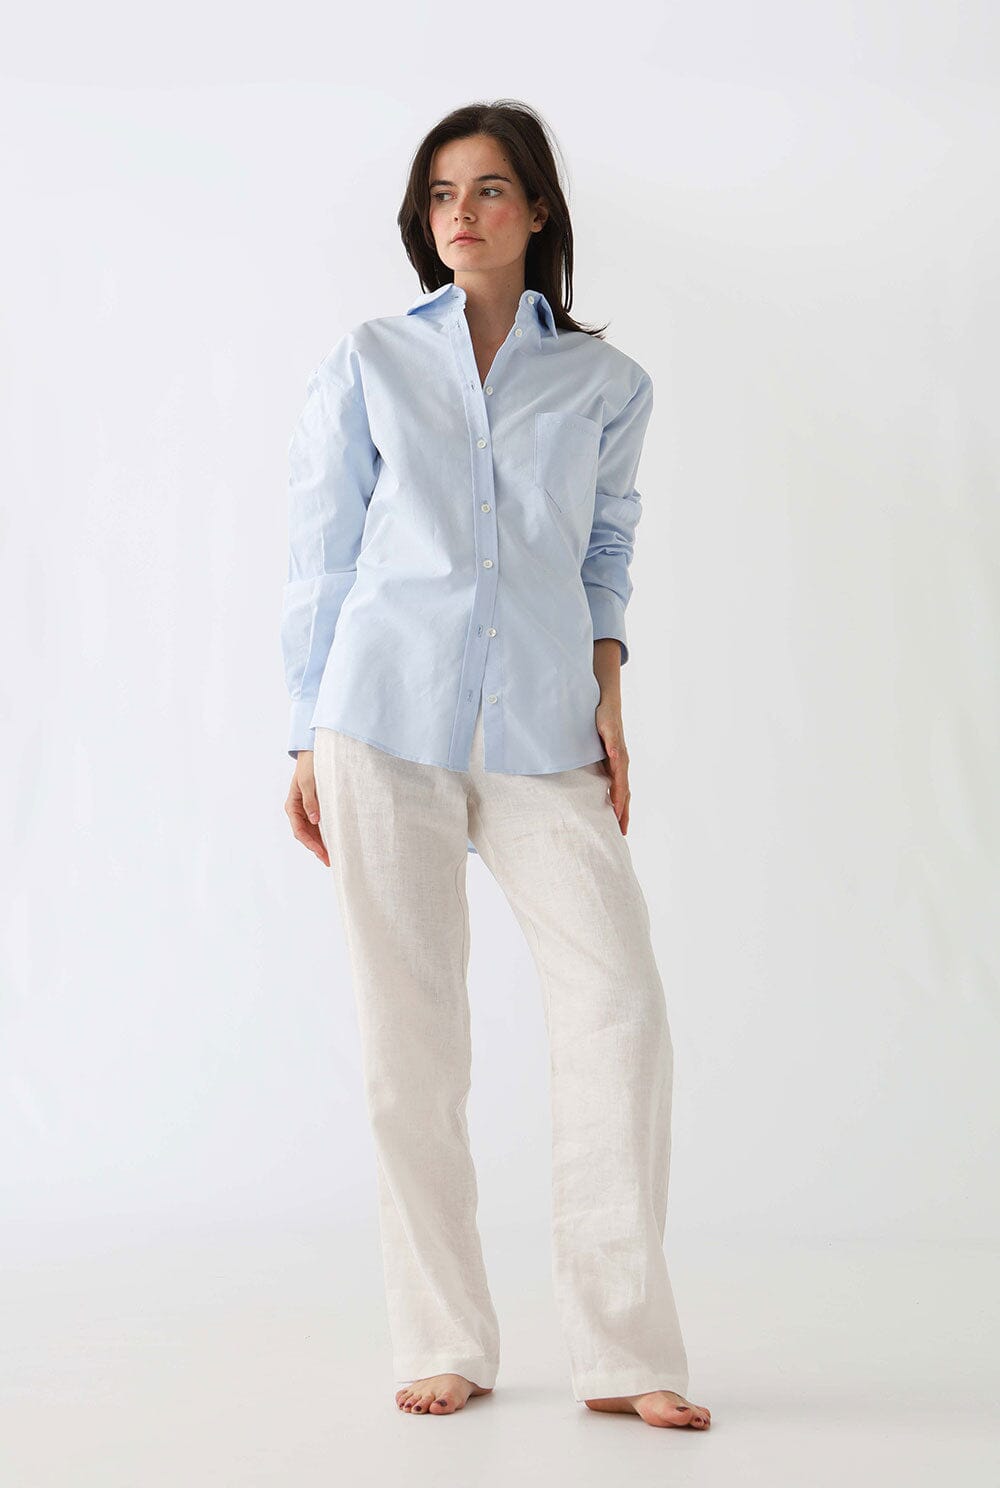 OXFORD SHIRT: LIGHT BLUE Shirts & blouses The Villã Concept 